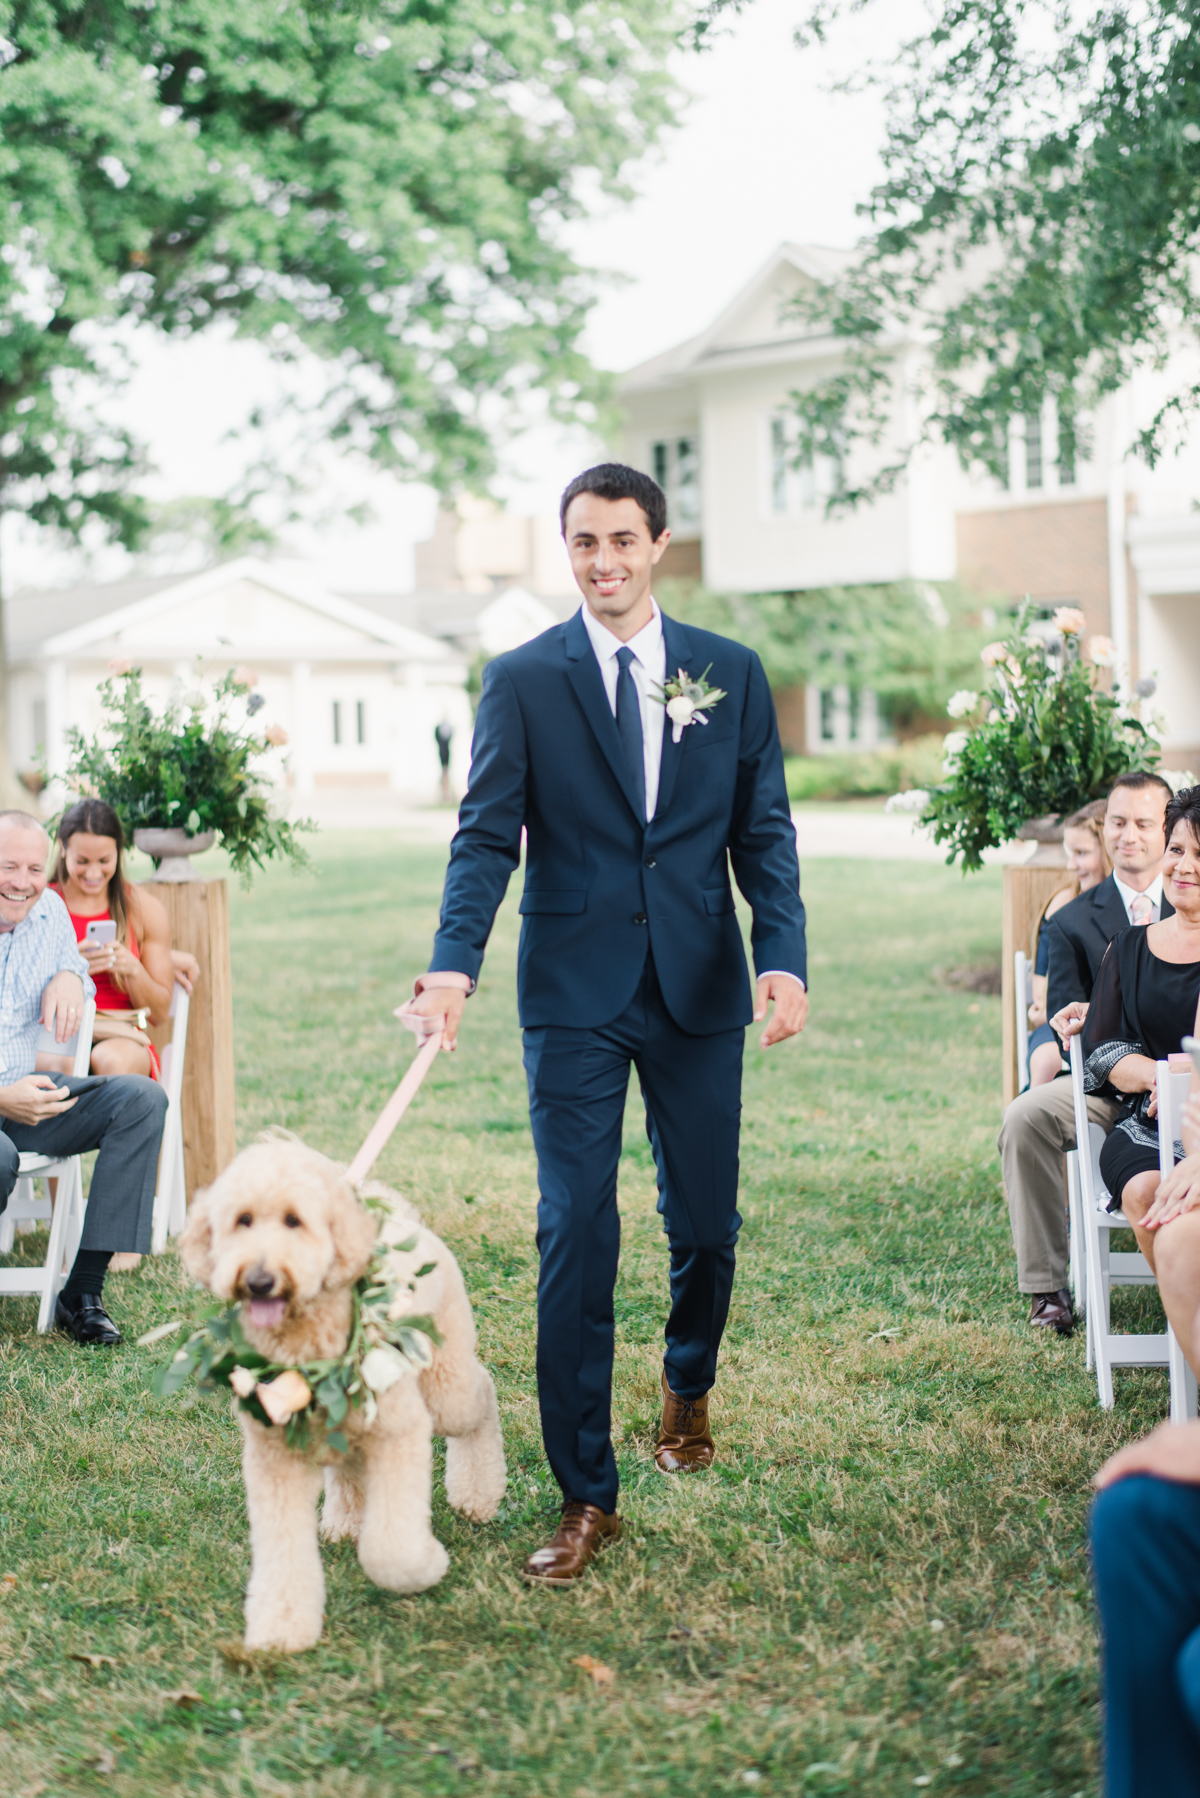 acacia ballroom wedding, cleveland wedding, blush garden wedding, wedding dog, outdoor ceremony, garden ceremony, outdoor wedding